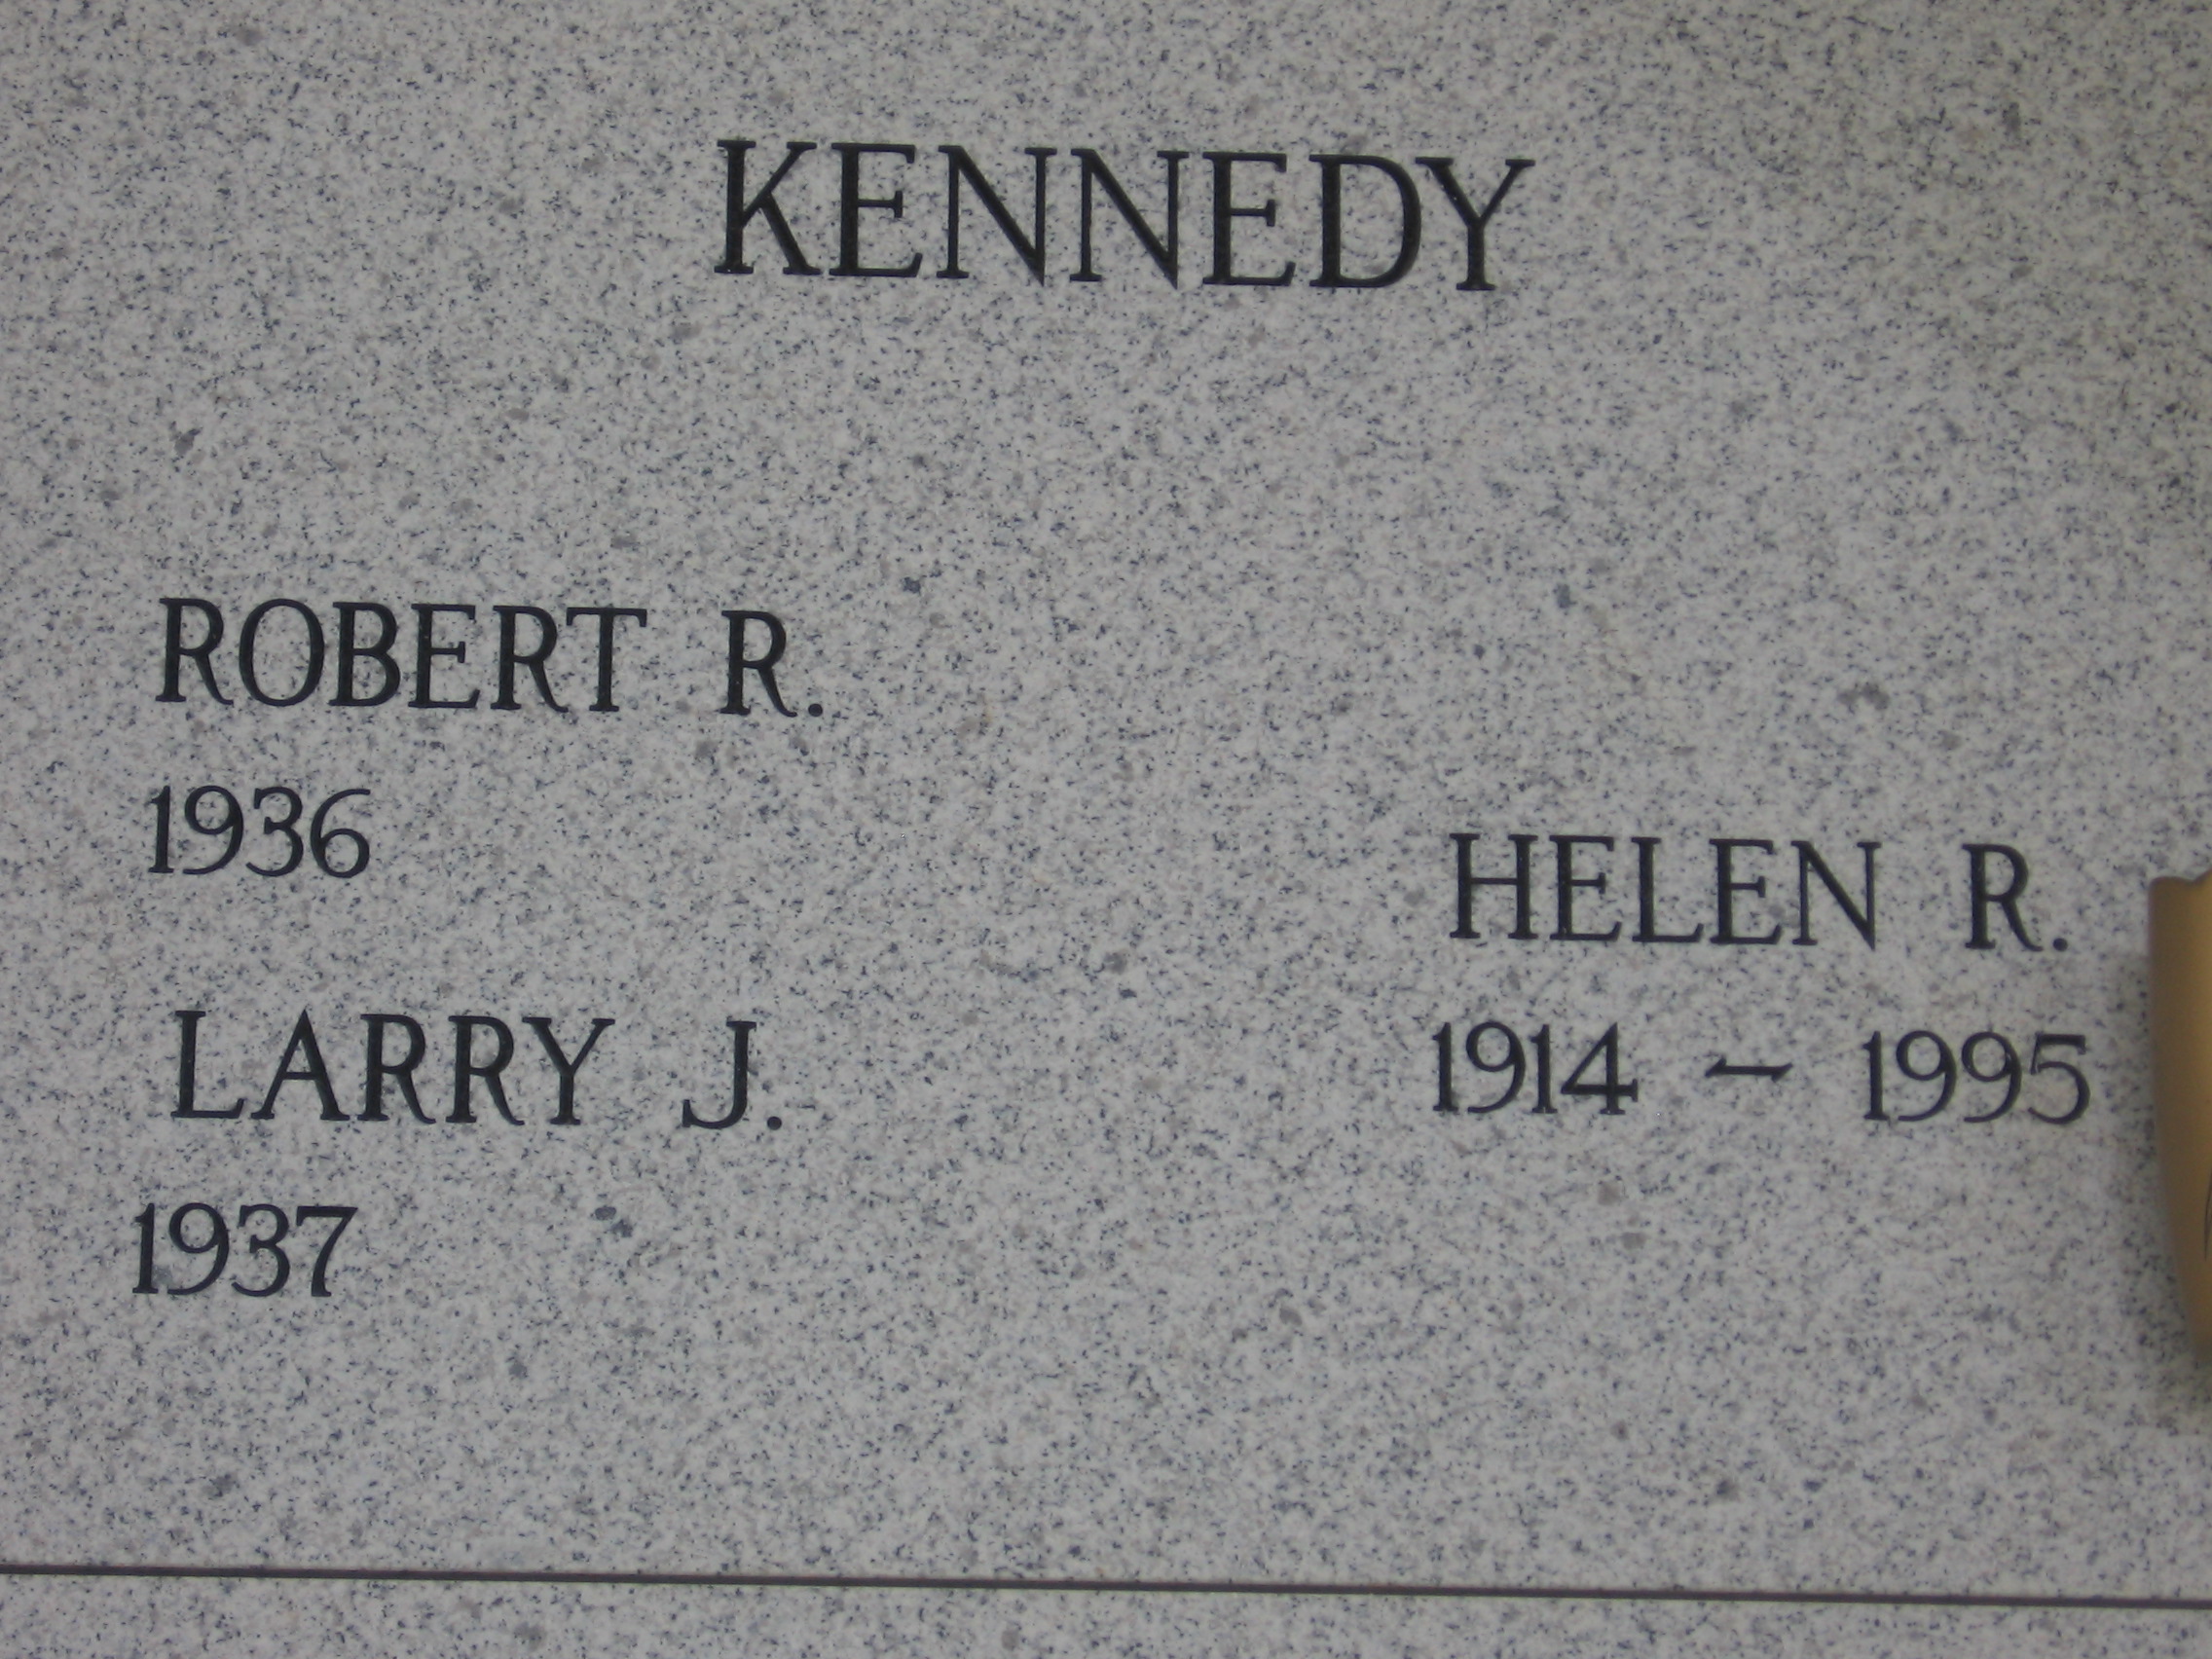 Robert R Kennedy